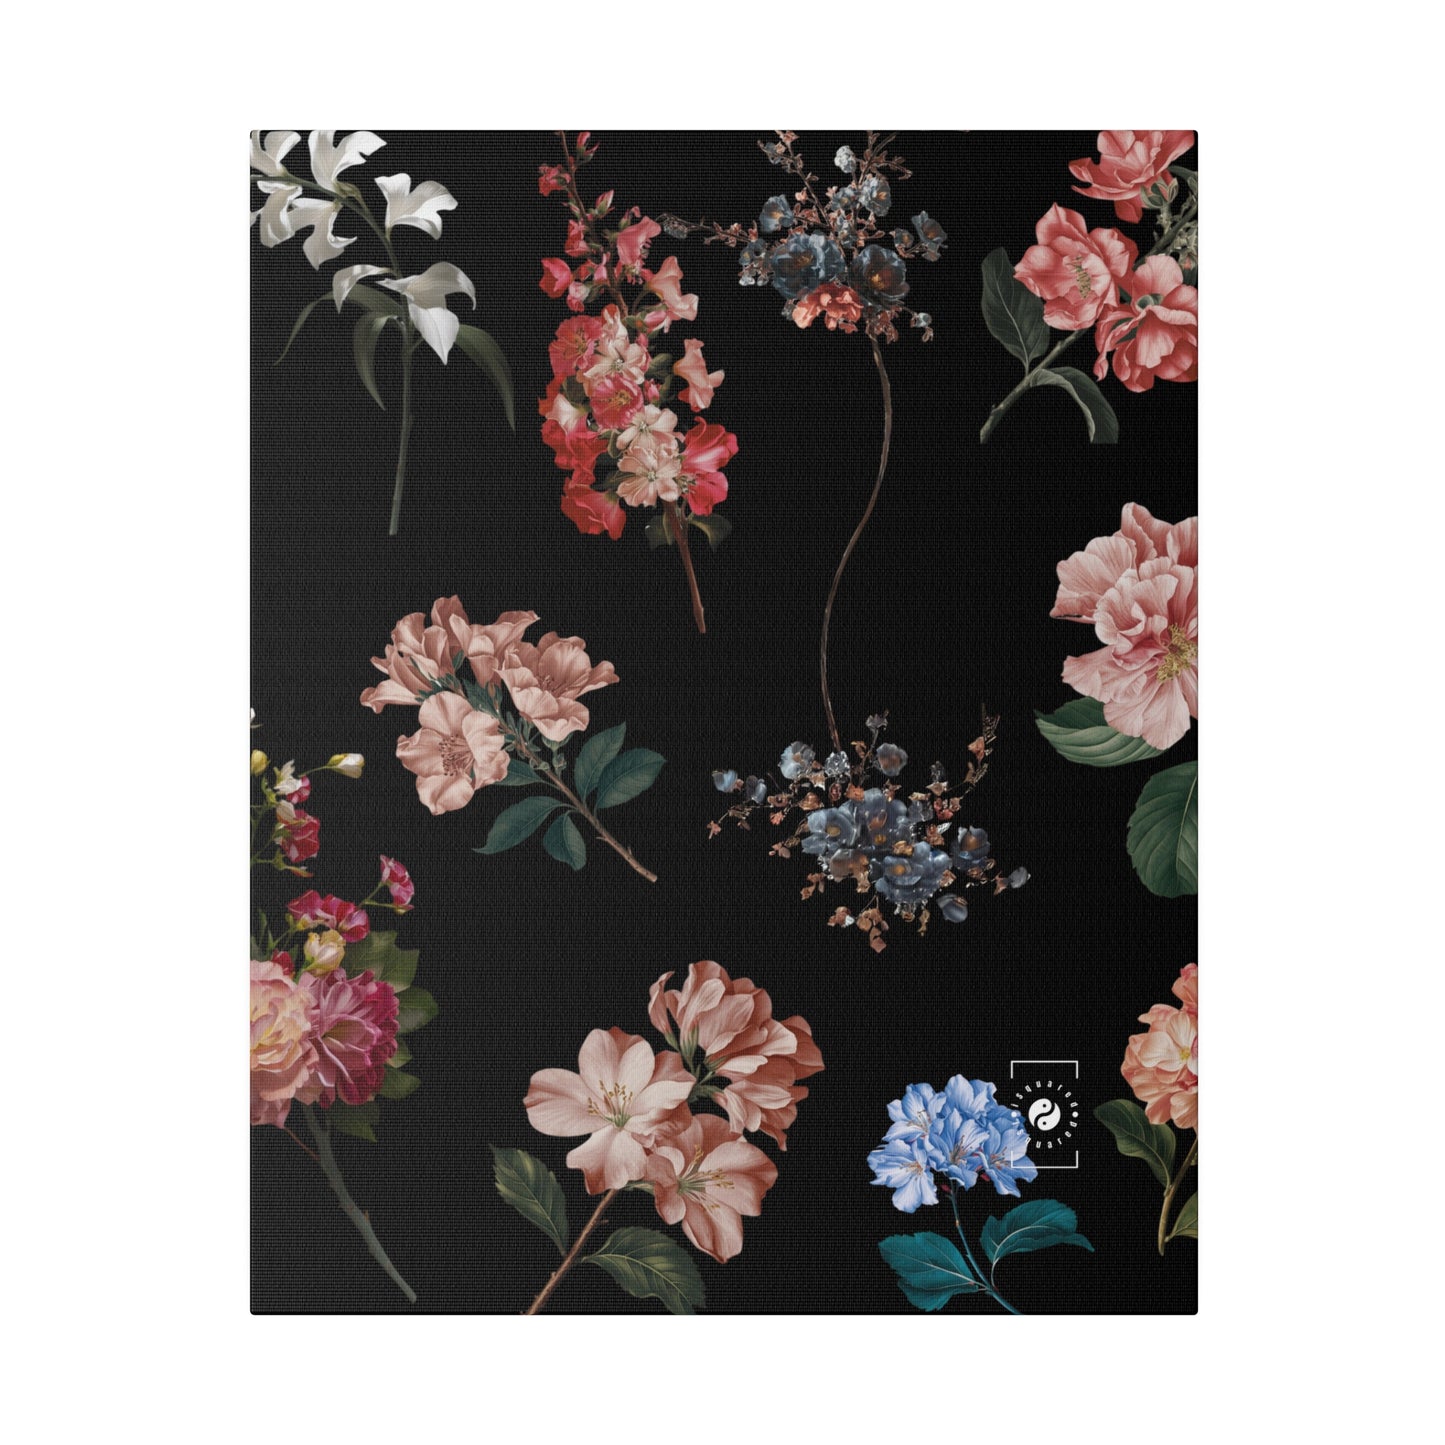 Botanicals on Black - Art Print Canvas